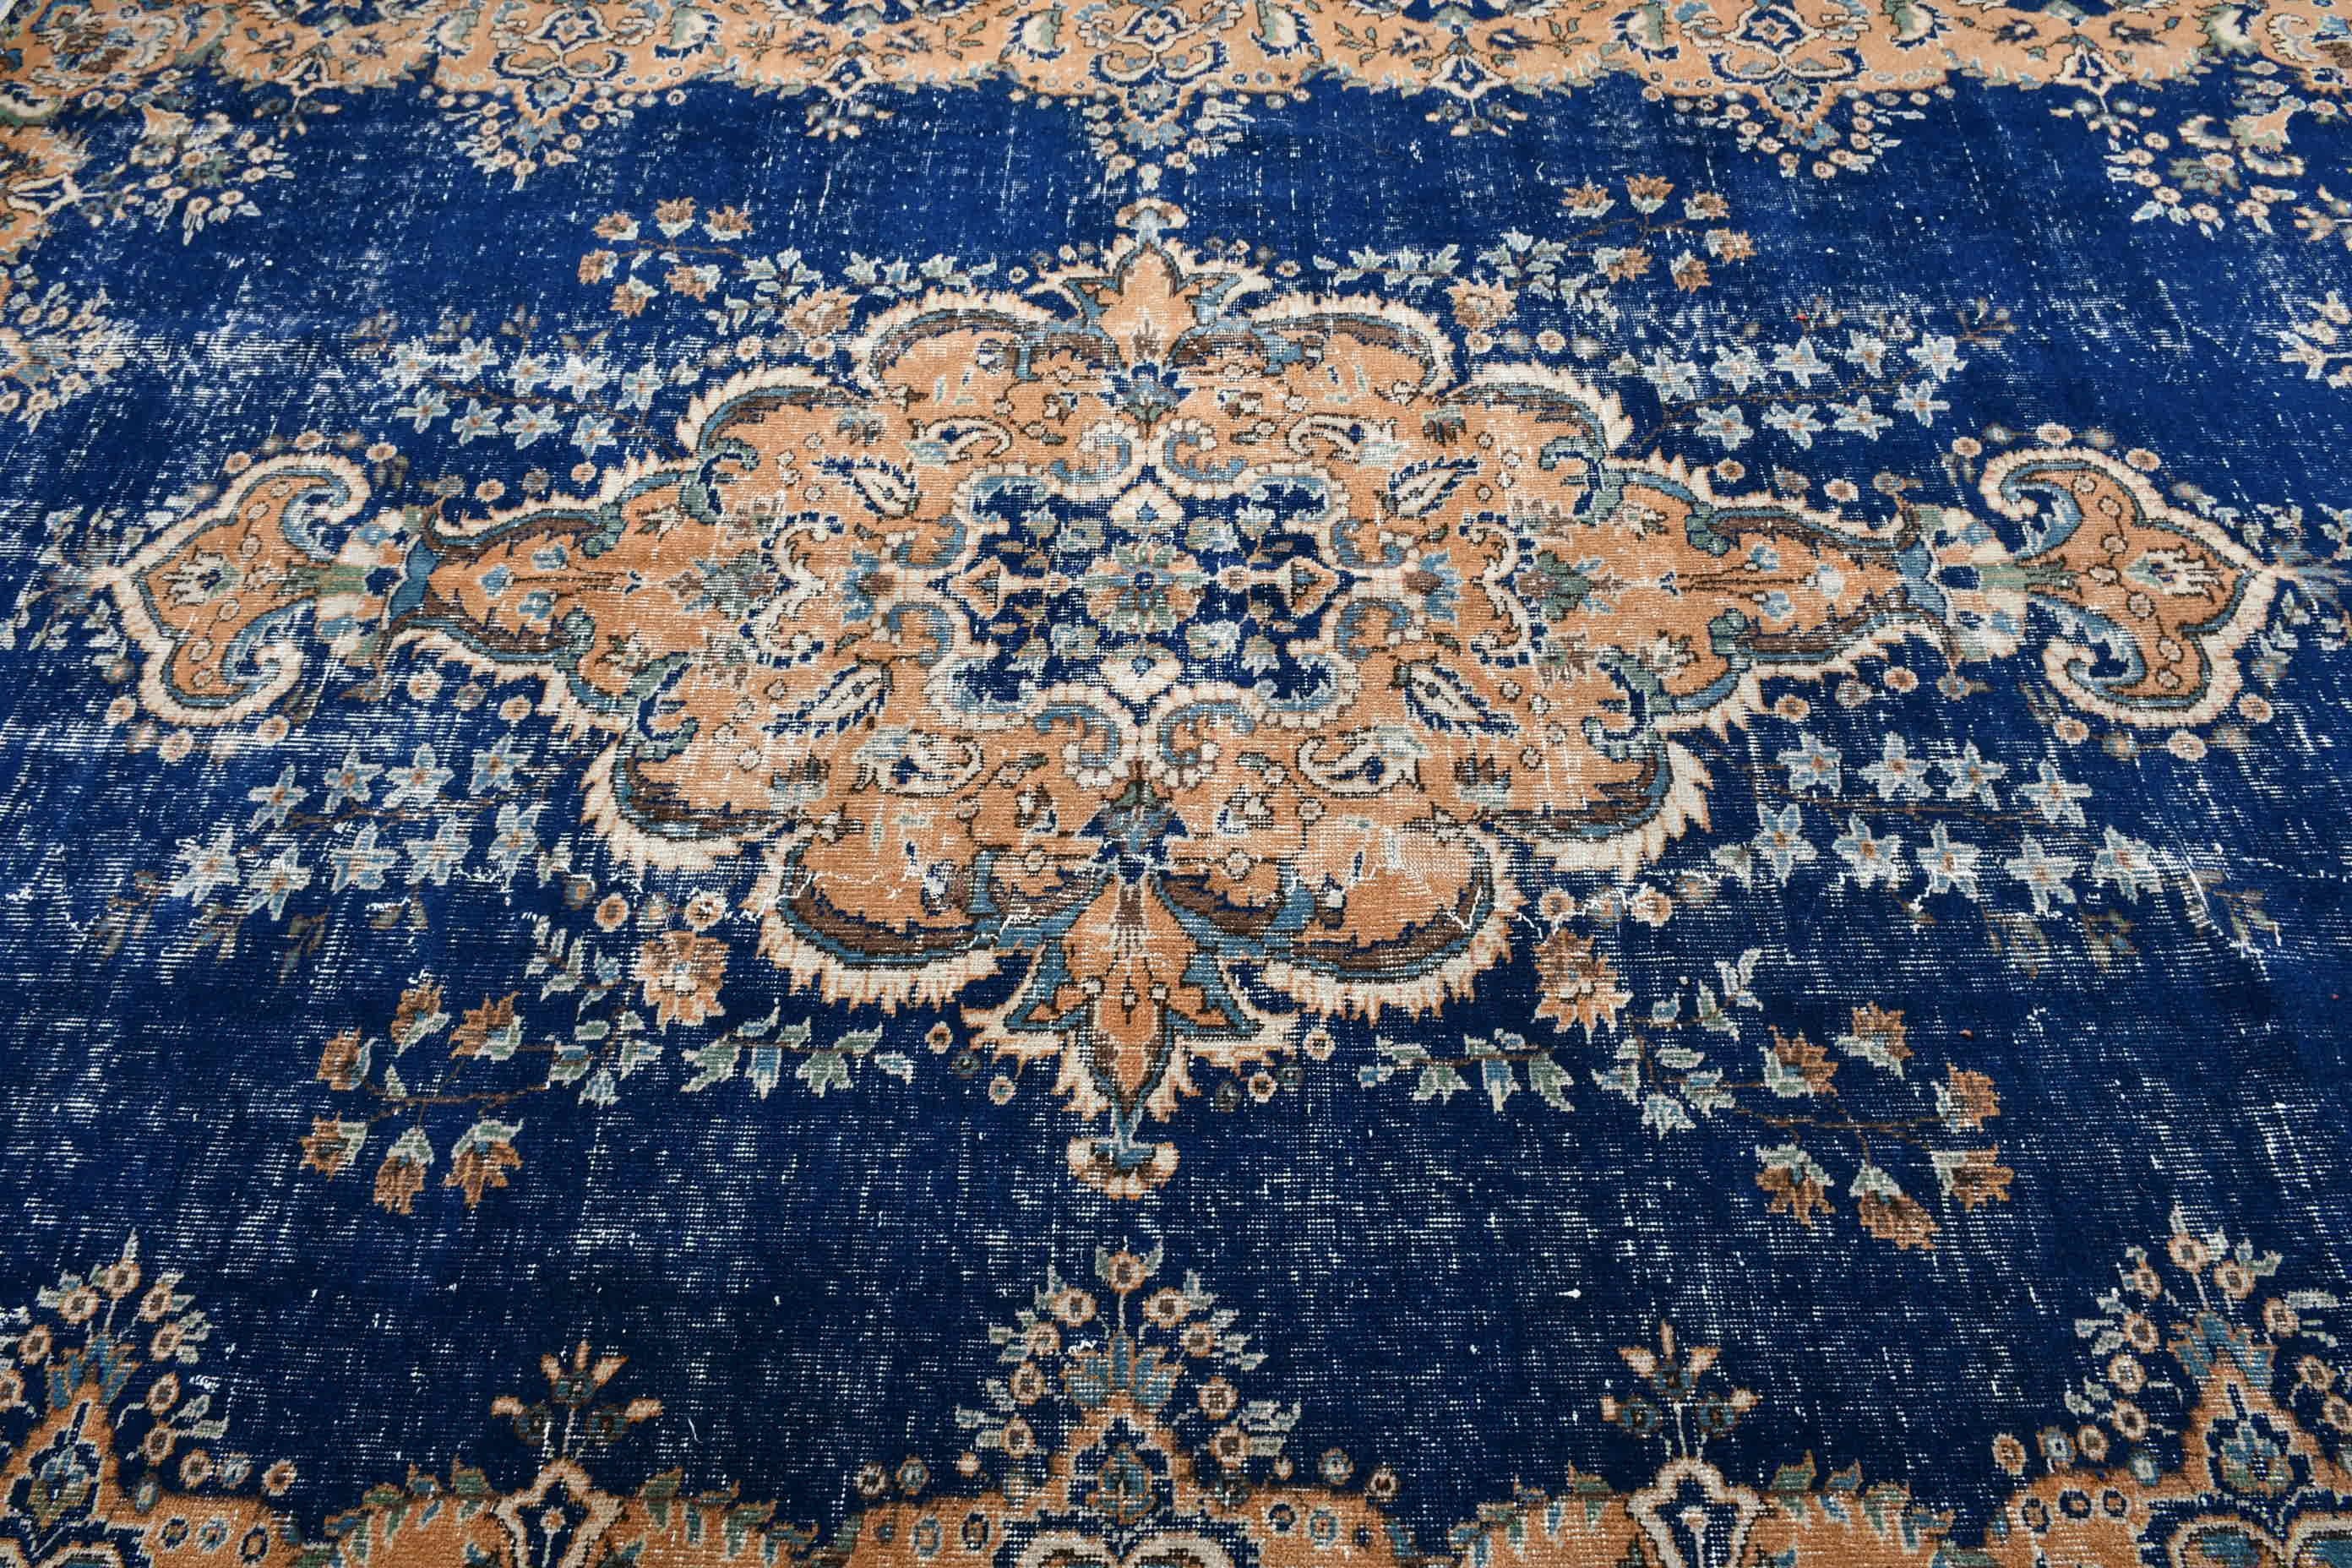 Turkish Rug, Office Rugs, Salon Rug, Anatolian Rug, Bedroom Rug, Blue Oriental Rugs, Moroccan Rugs, Vintage Rug, 6.8x10.2 ft Large Rug